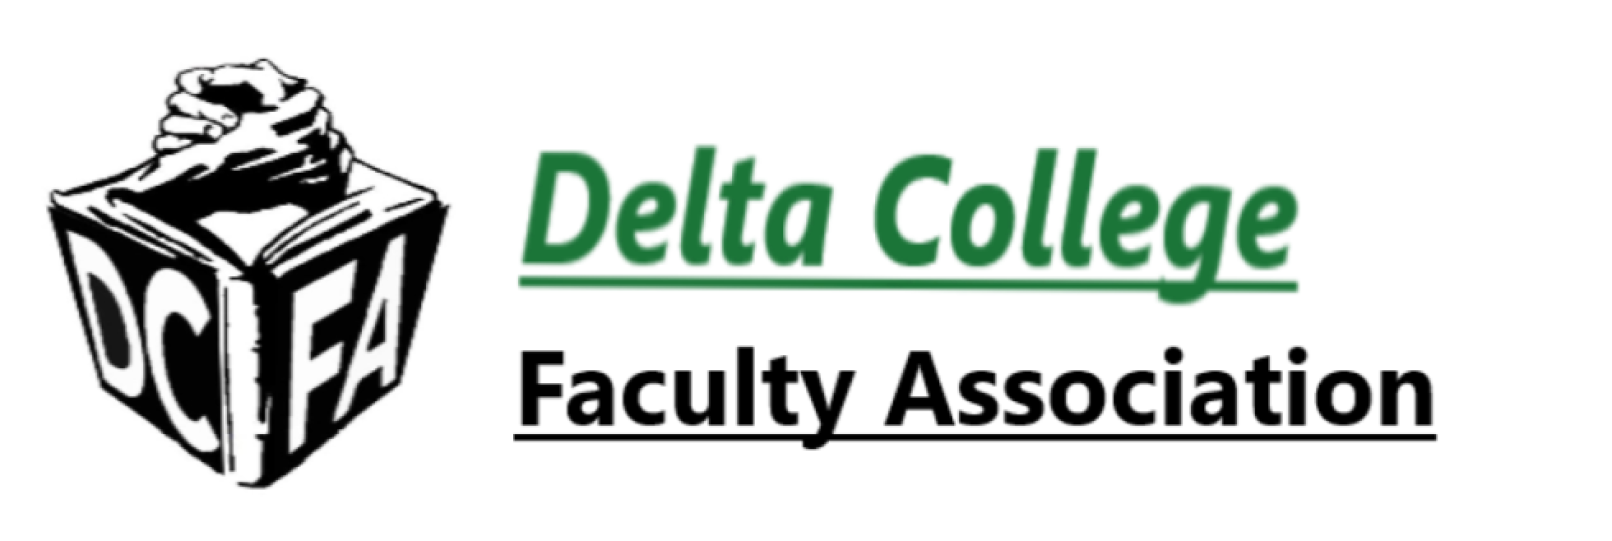 Delta College Faculty Association